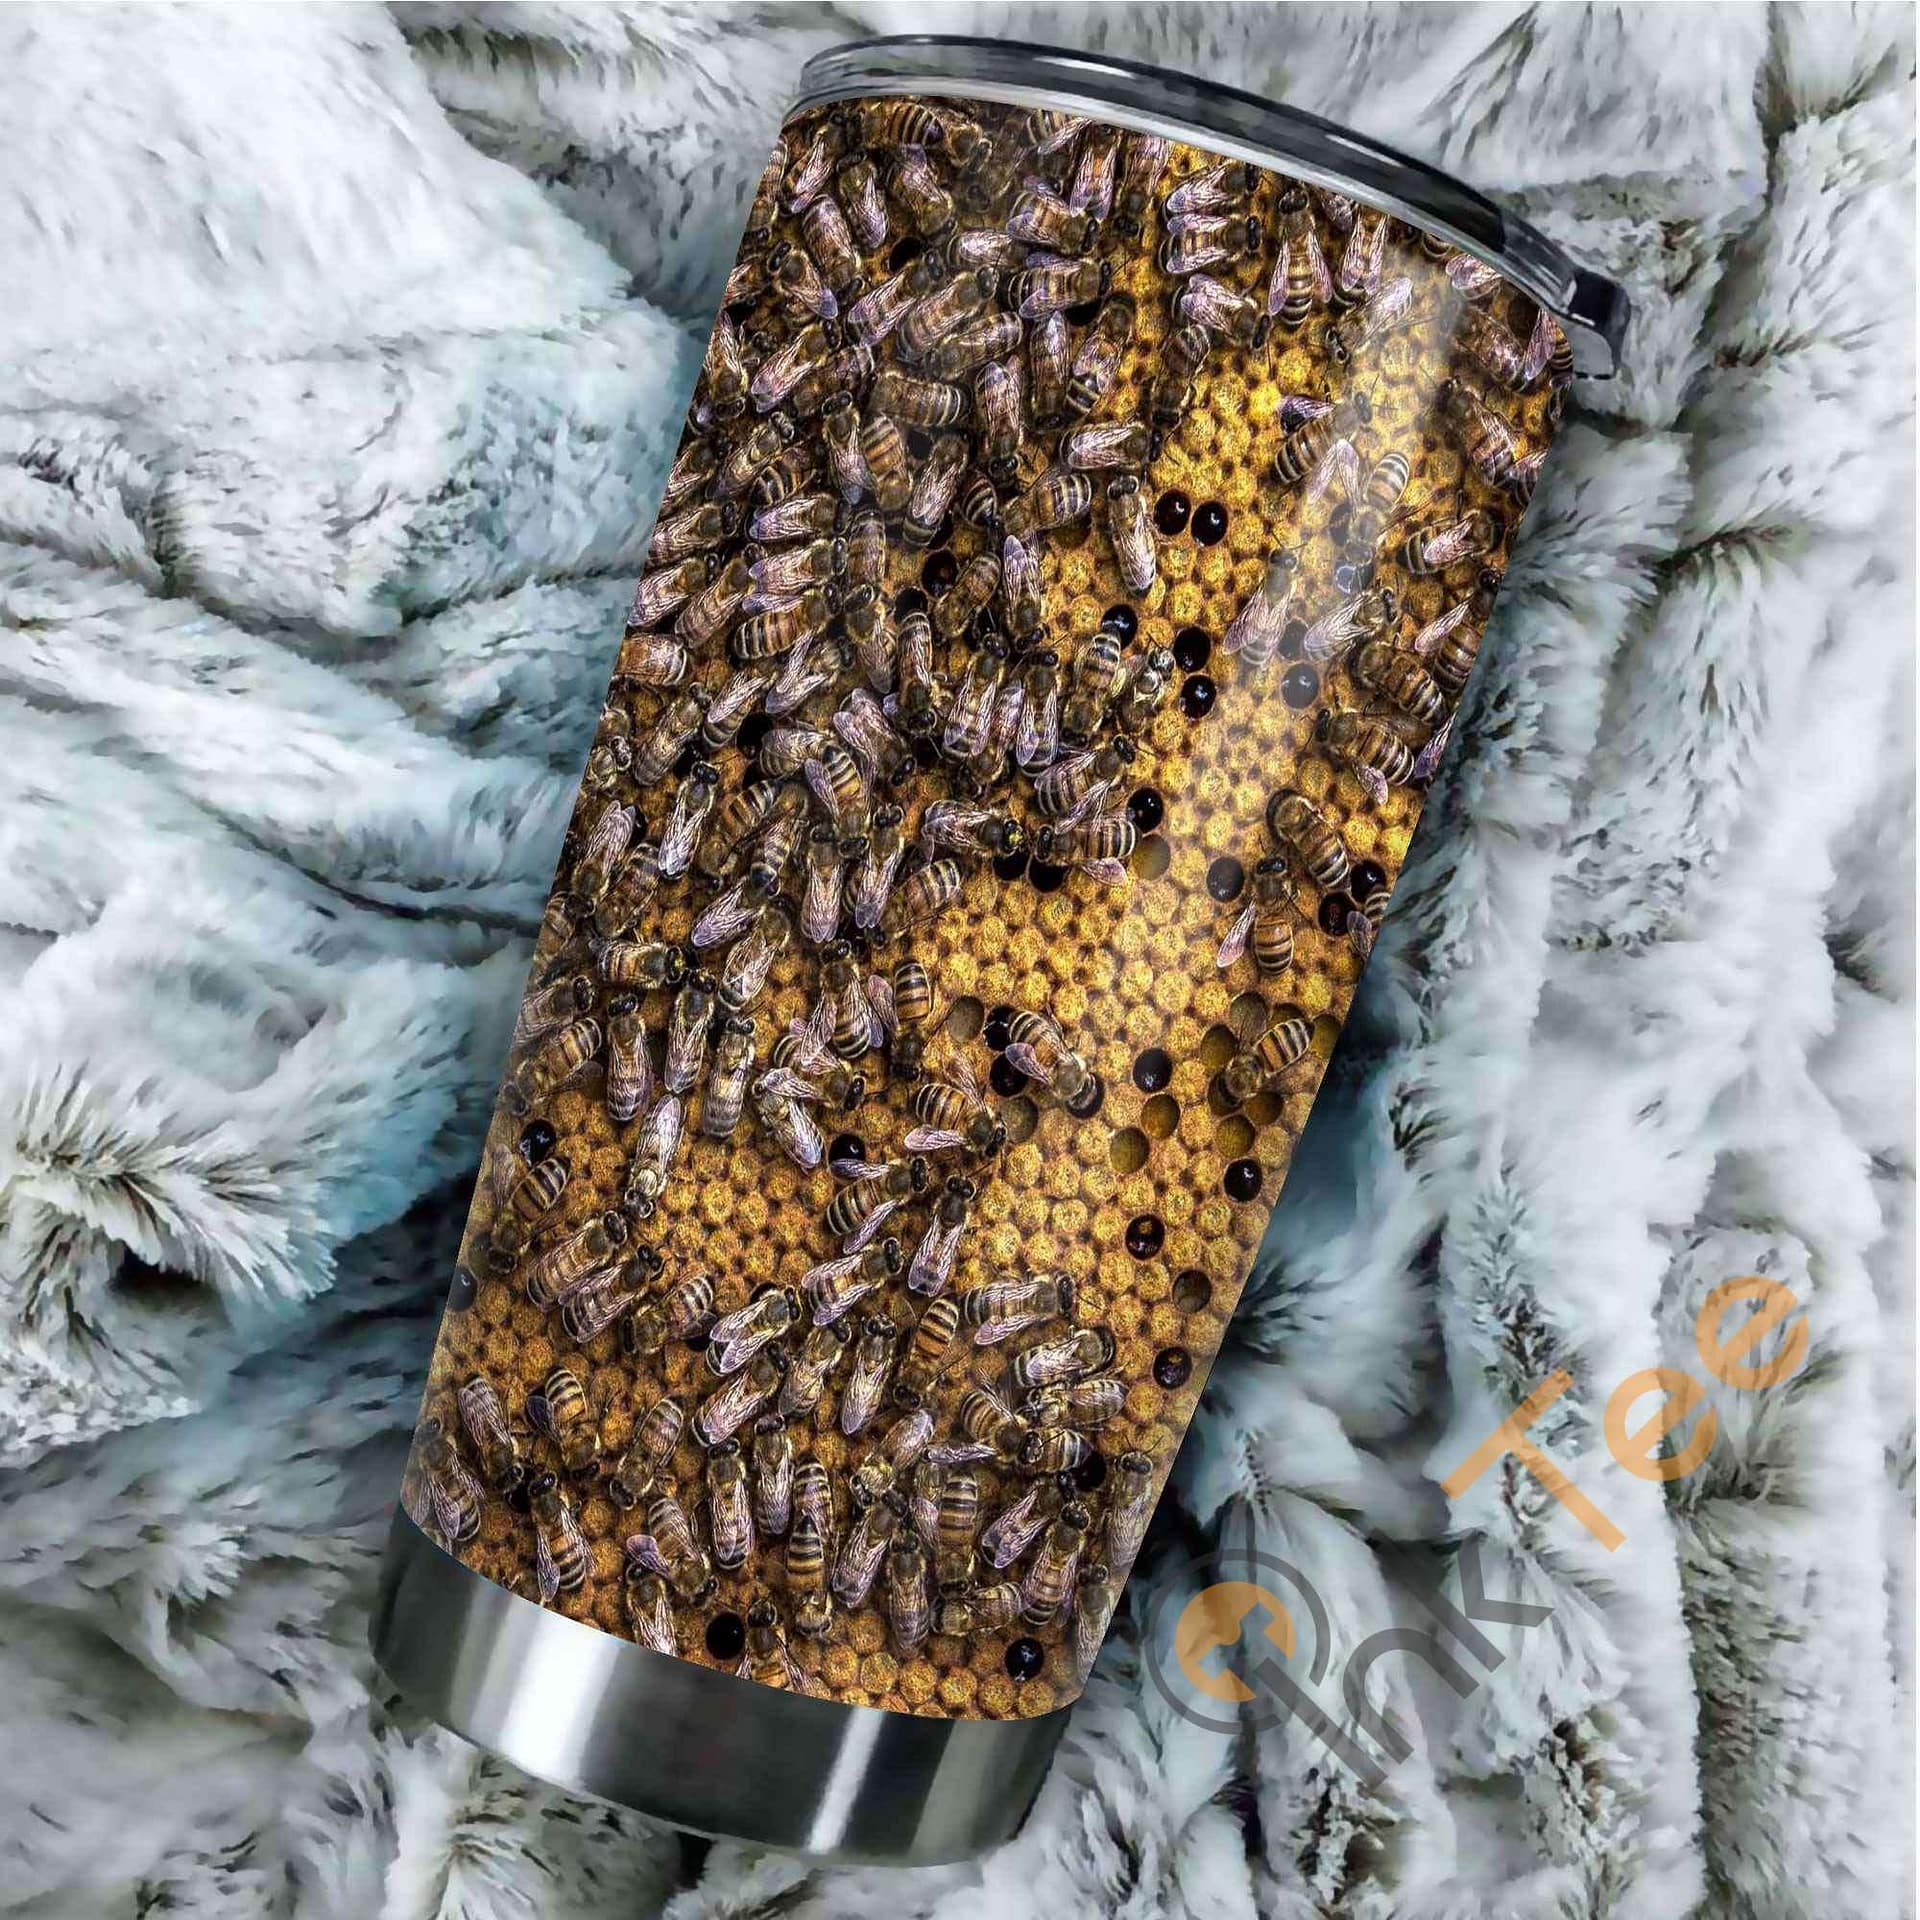 Bees Hive Amazon Best Seller Sku 2803 Stainless Steel Tumbler